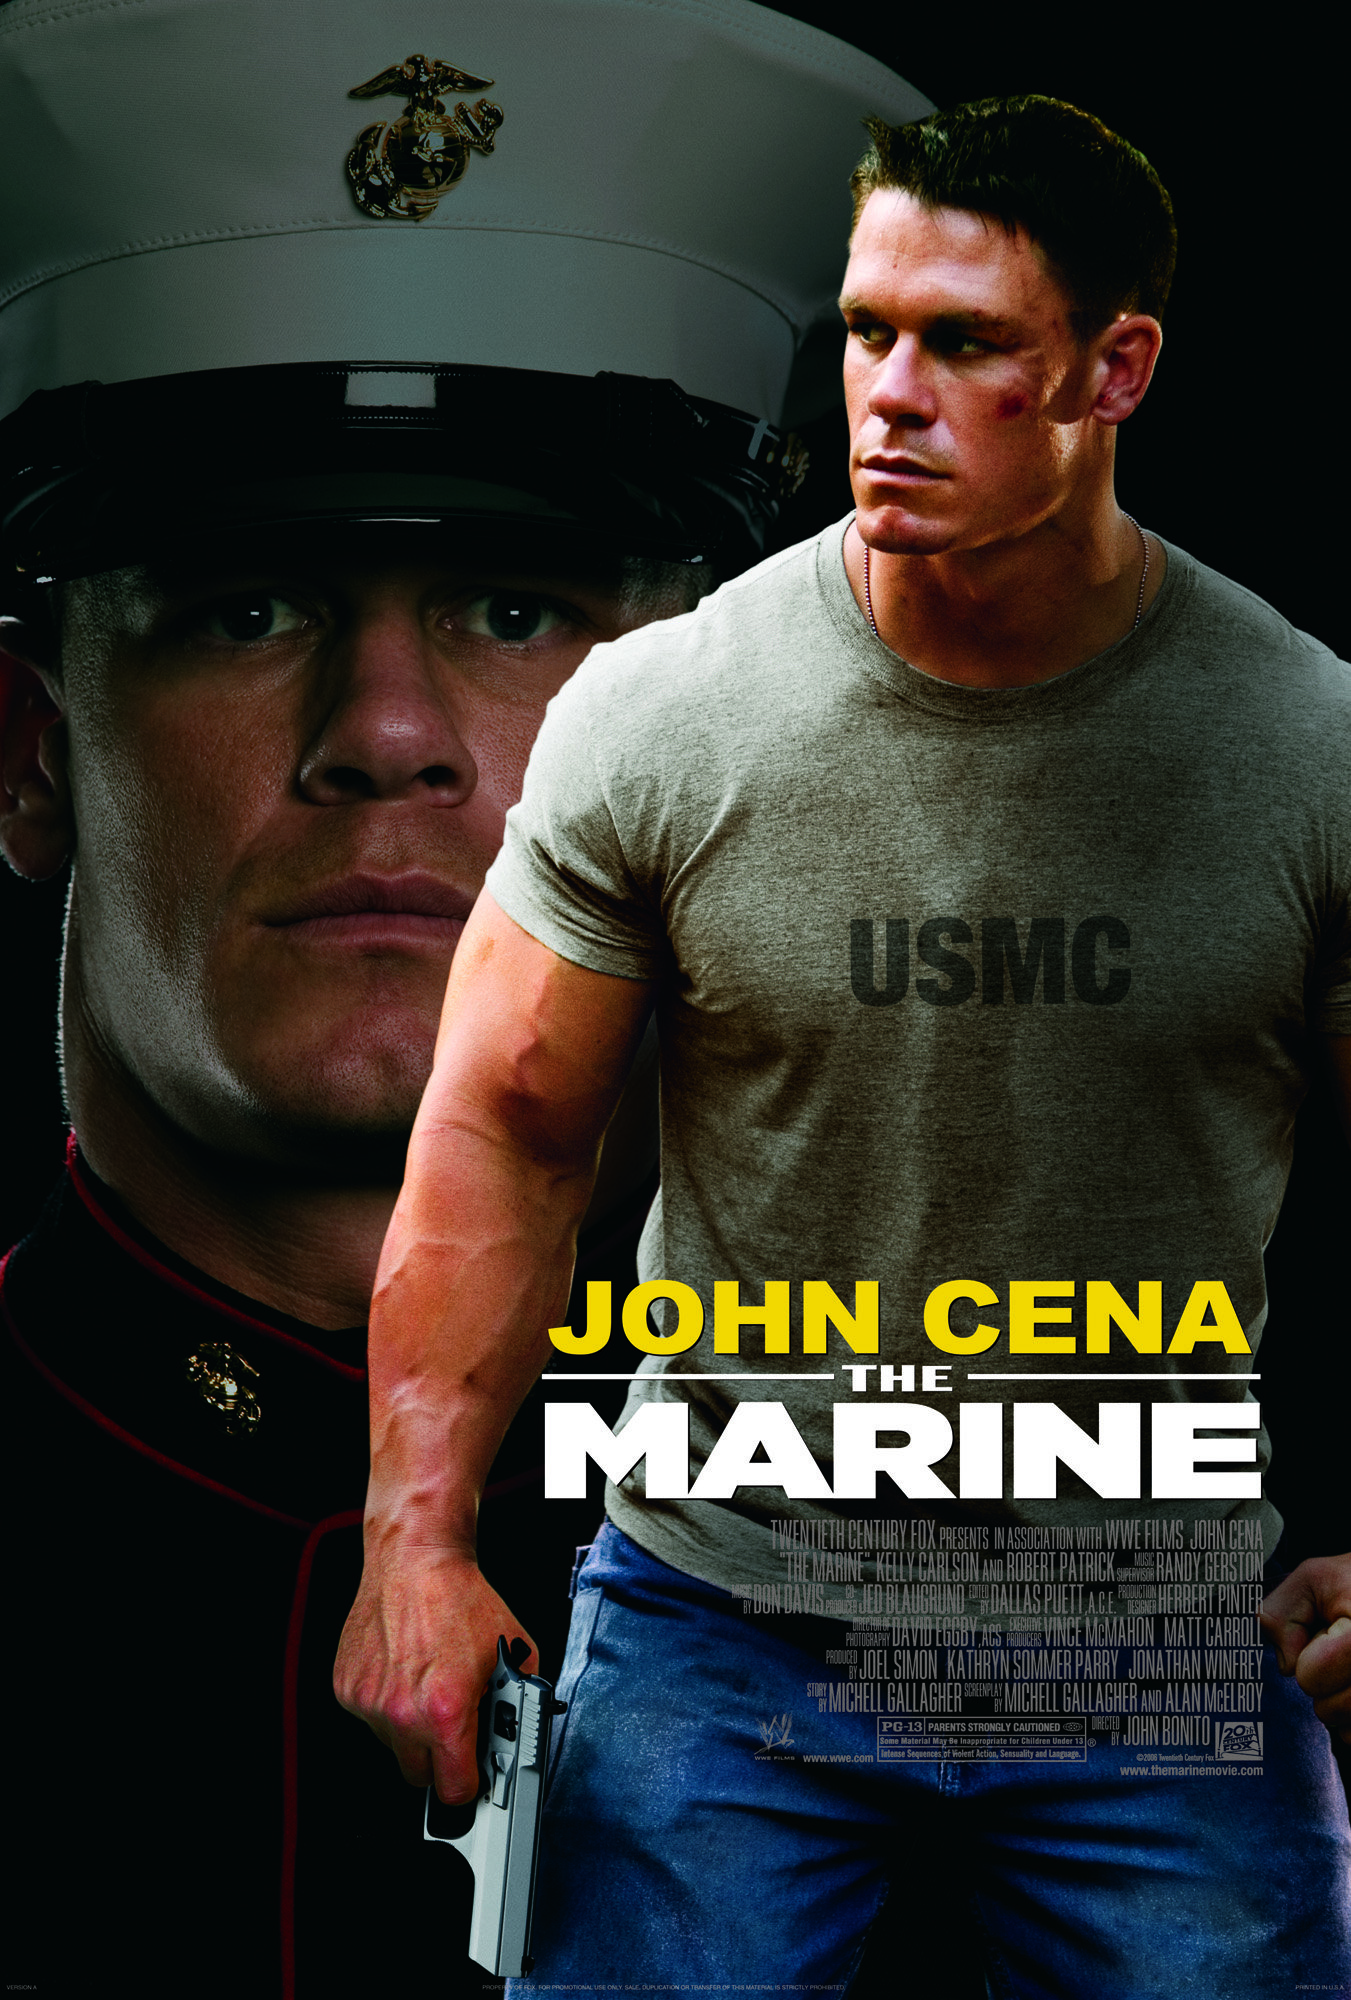 The Marine 1 (2006) ฅนคลั่ง ล่าทะลุขีดนรก John Cena